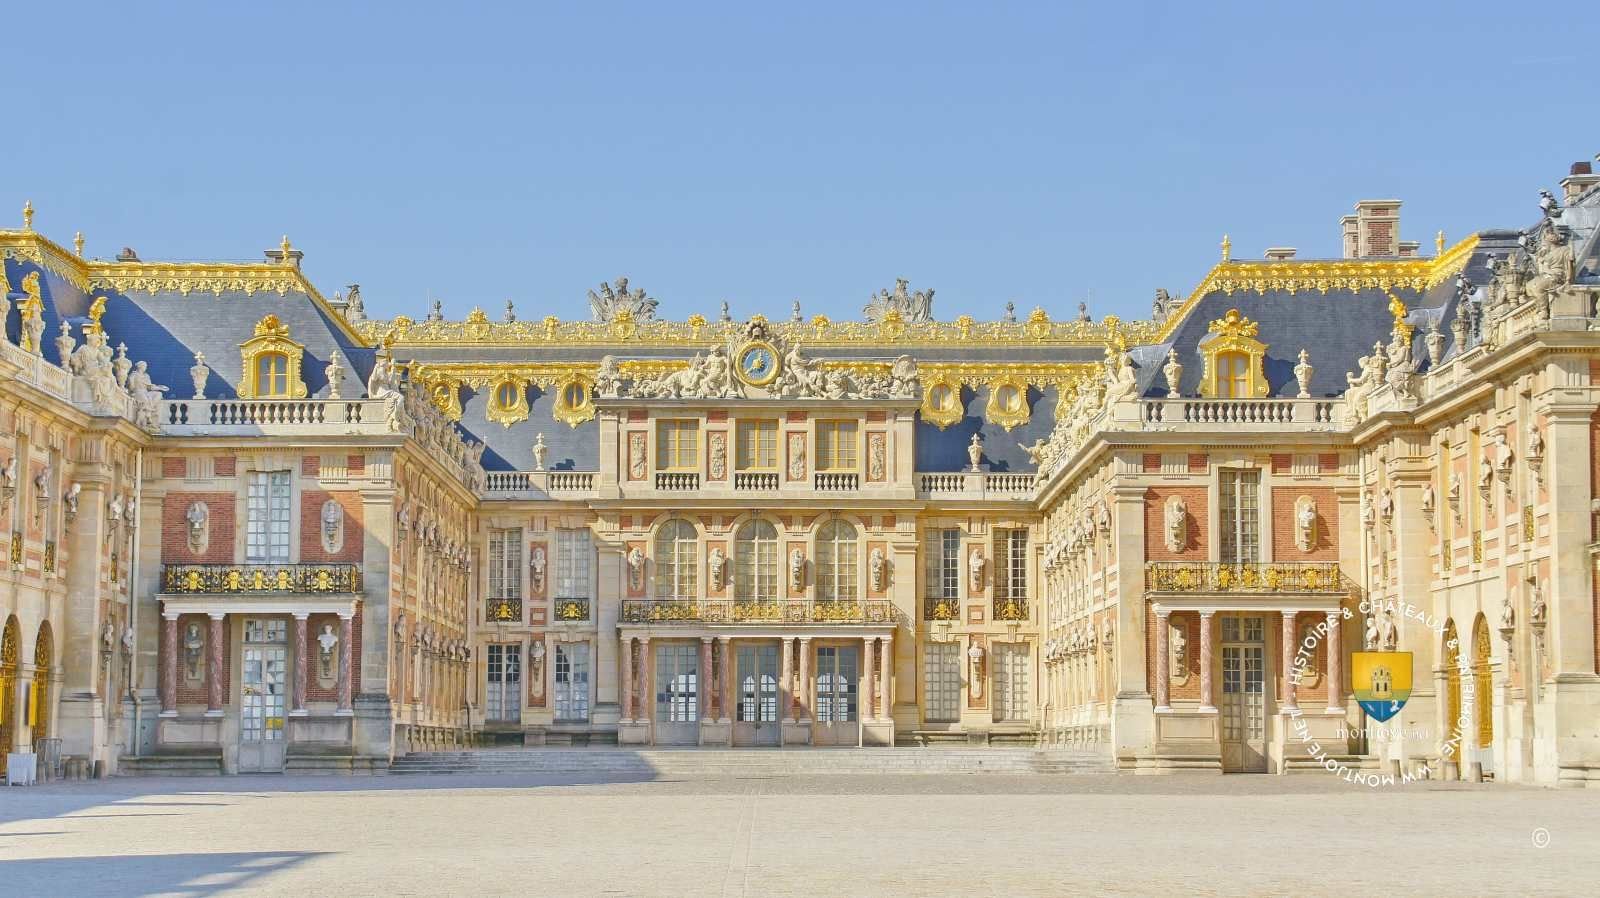 Chateau de versailles. Версаль дворец Франция. Версальский дворец Барокко. Версальский Королевский дворец Франция. Версальский дворец Версаль классицизм.